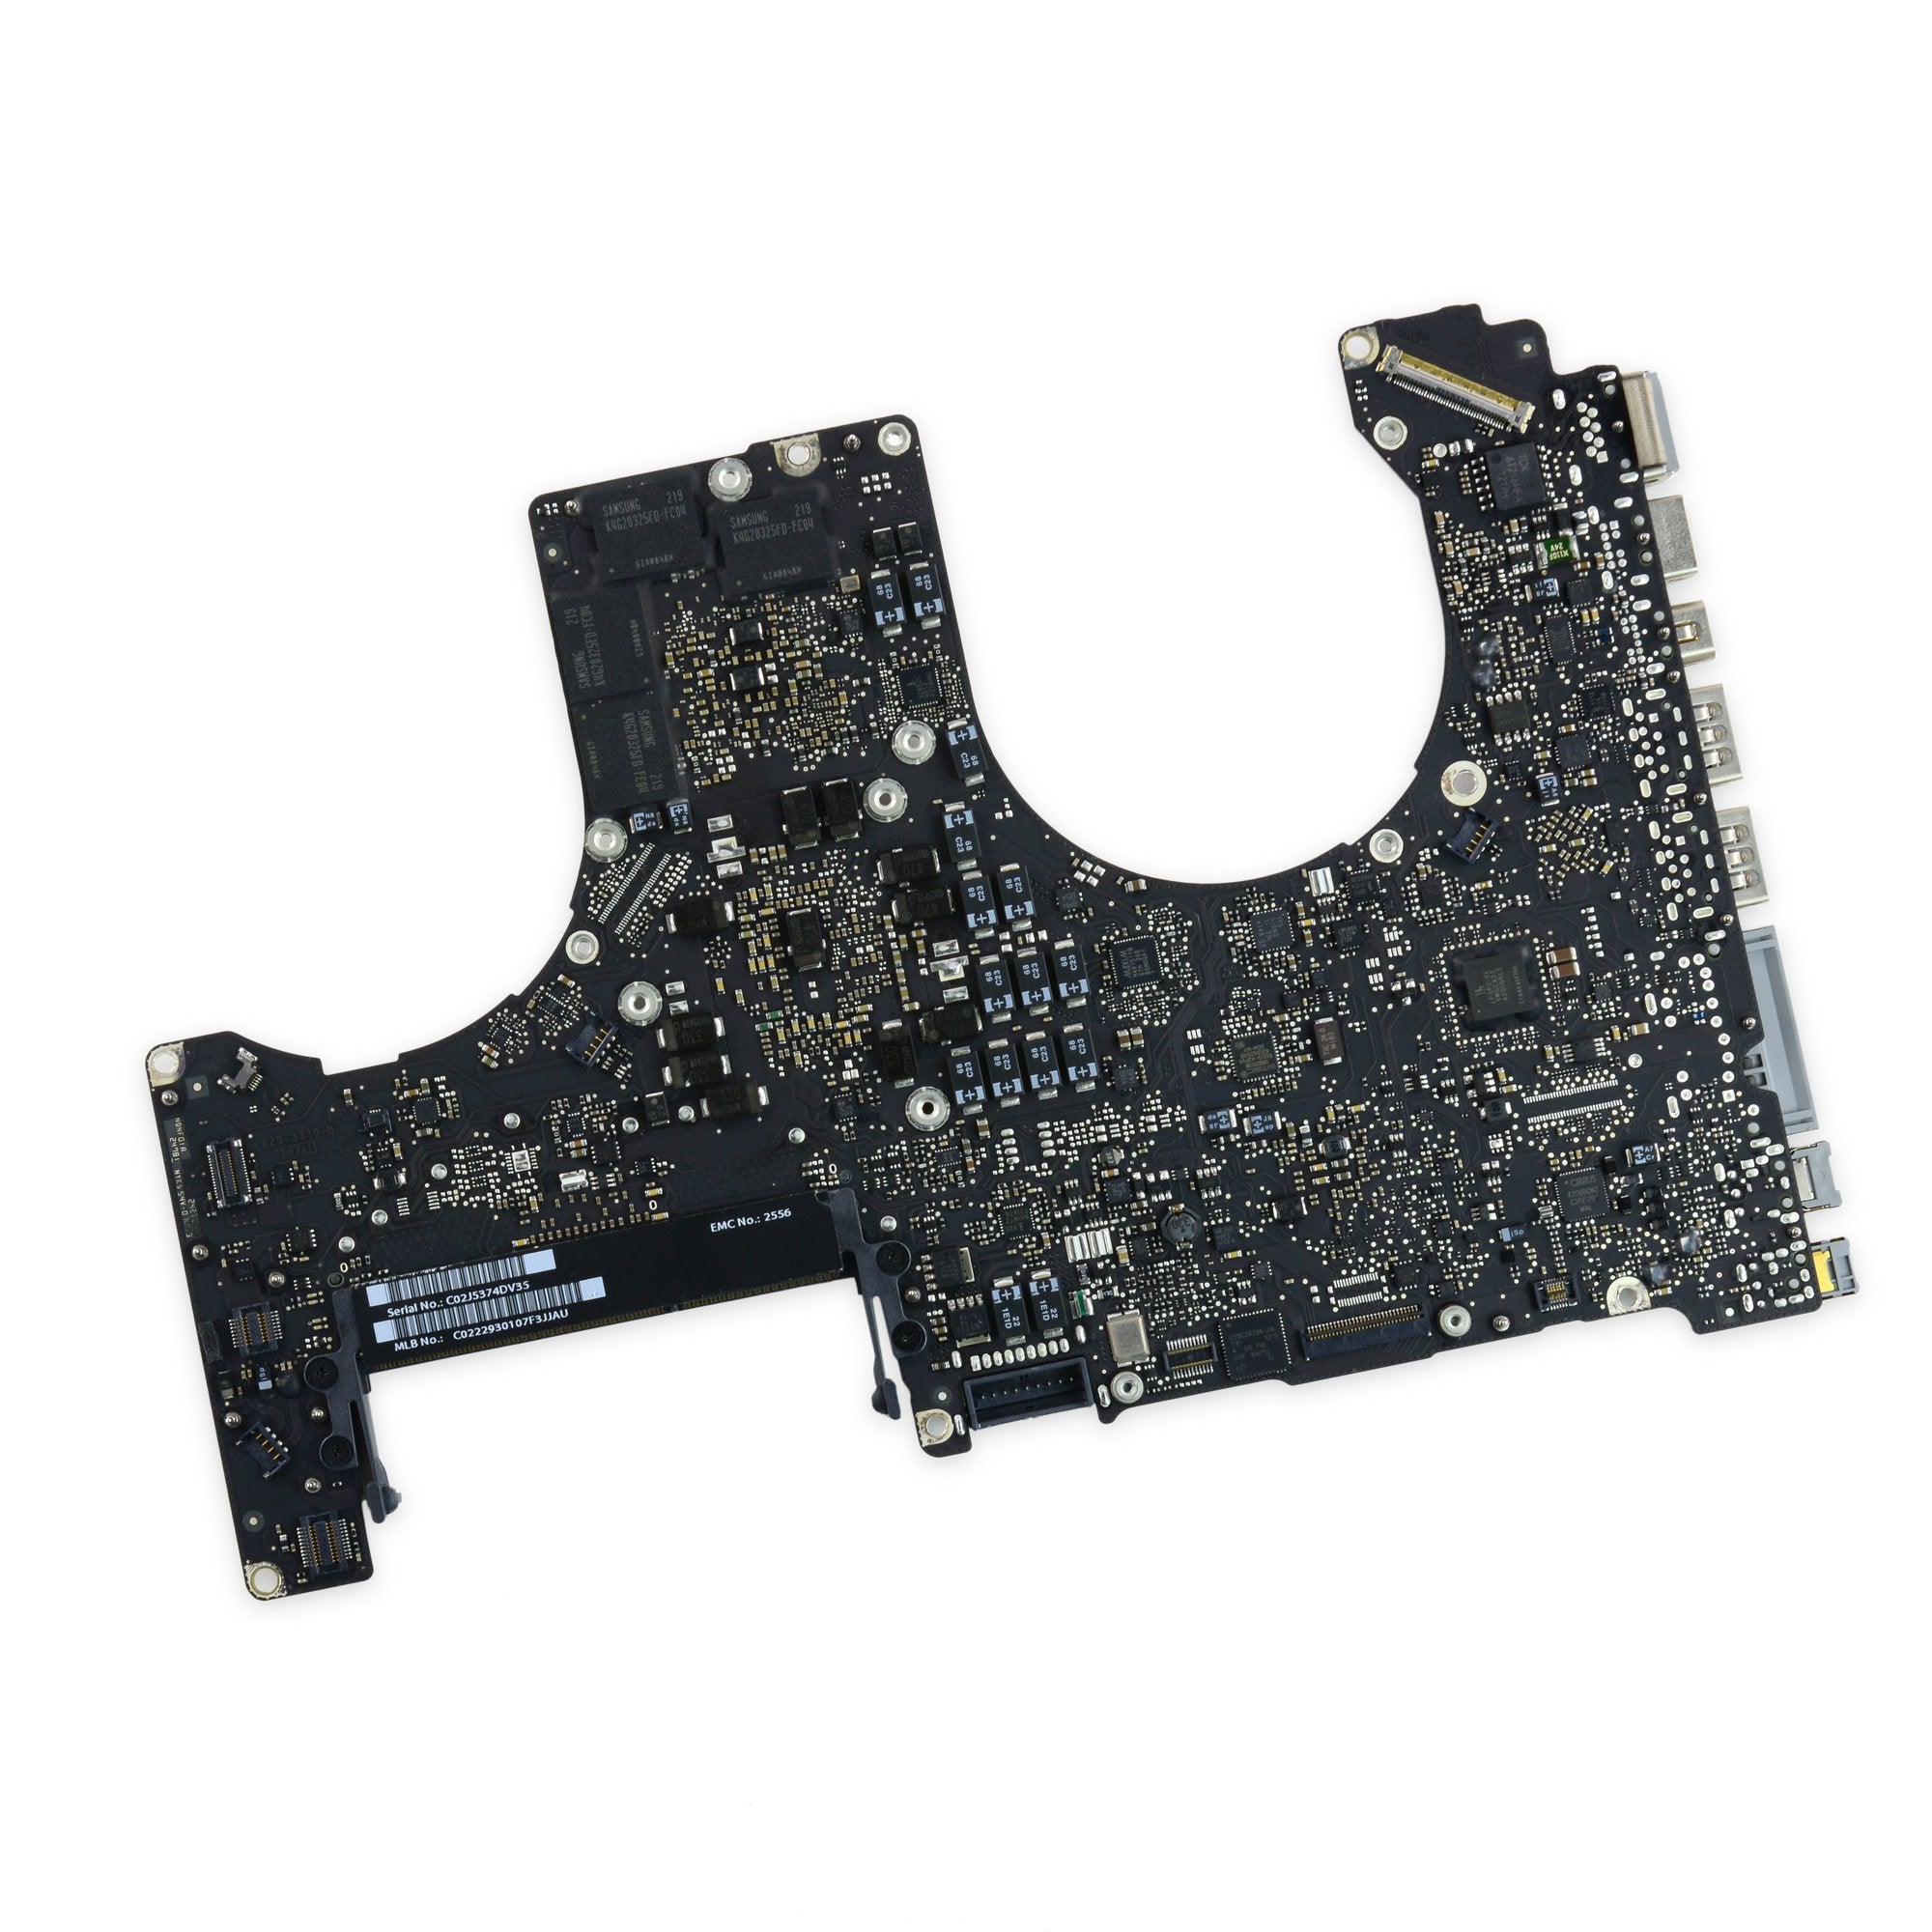 MacBook Pro 15" Unibody (Mid 2012) 2.6 GHz Logic Board